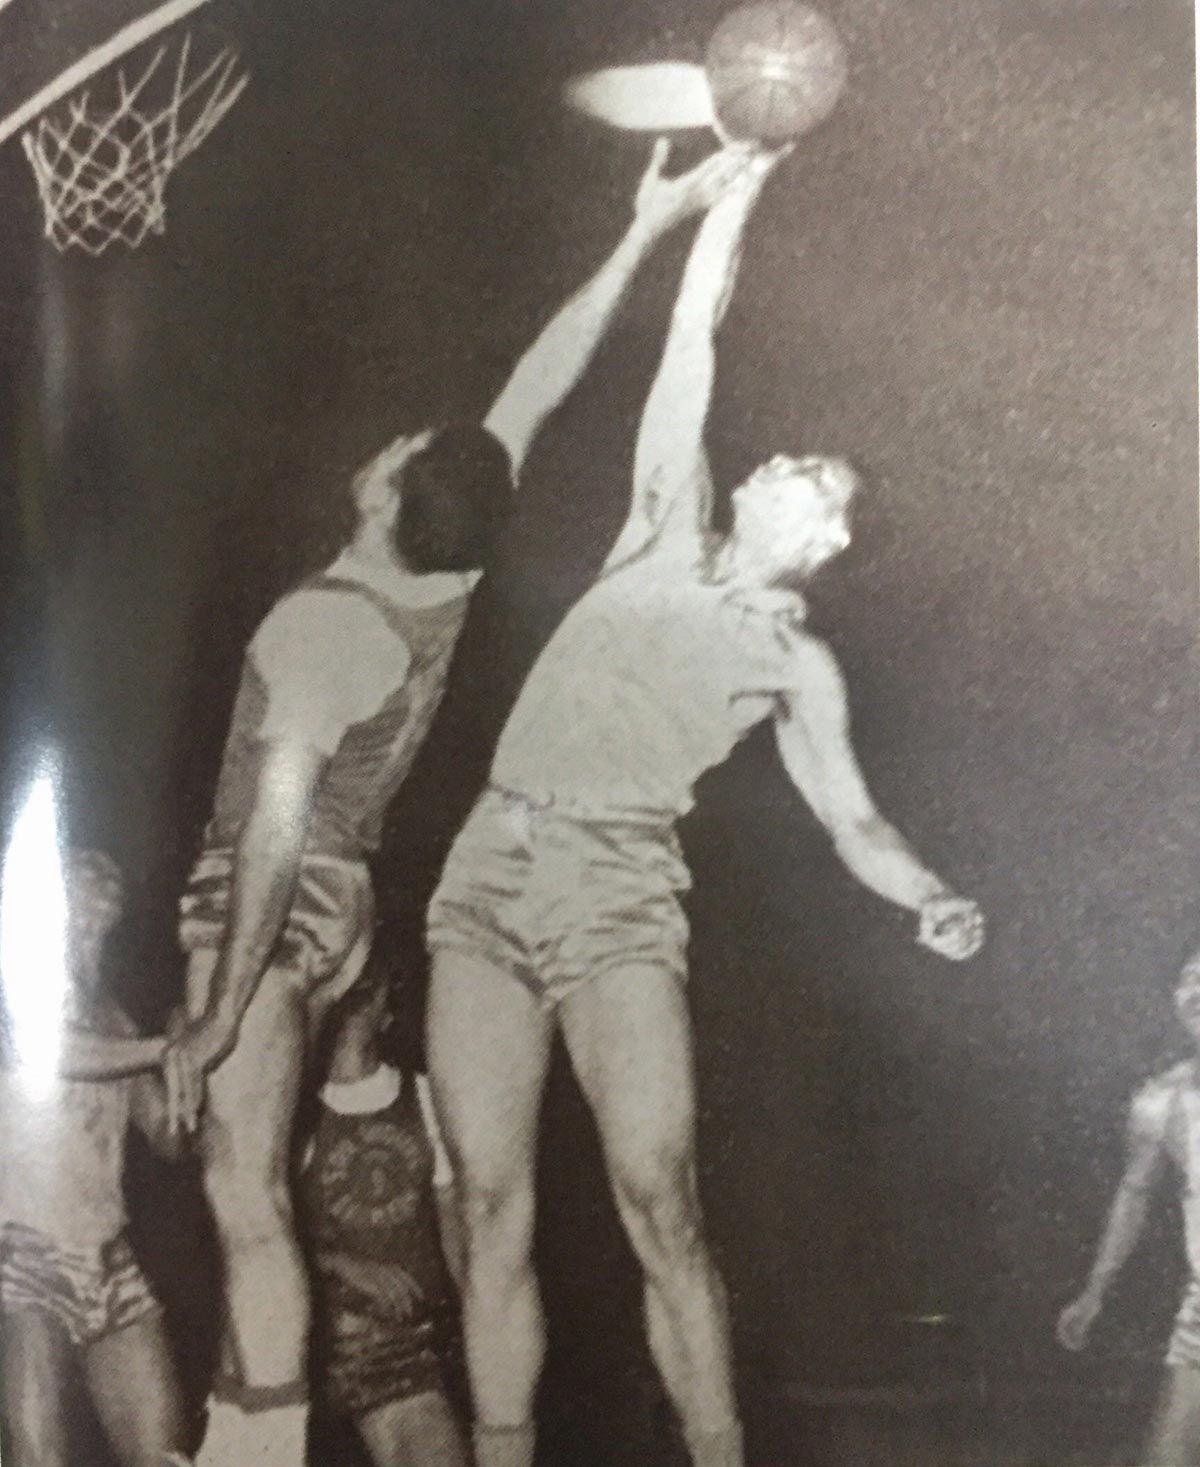 Philippine team placed third in 1954 World Basketball Championship